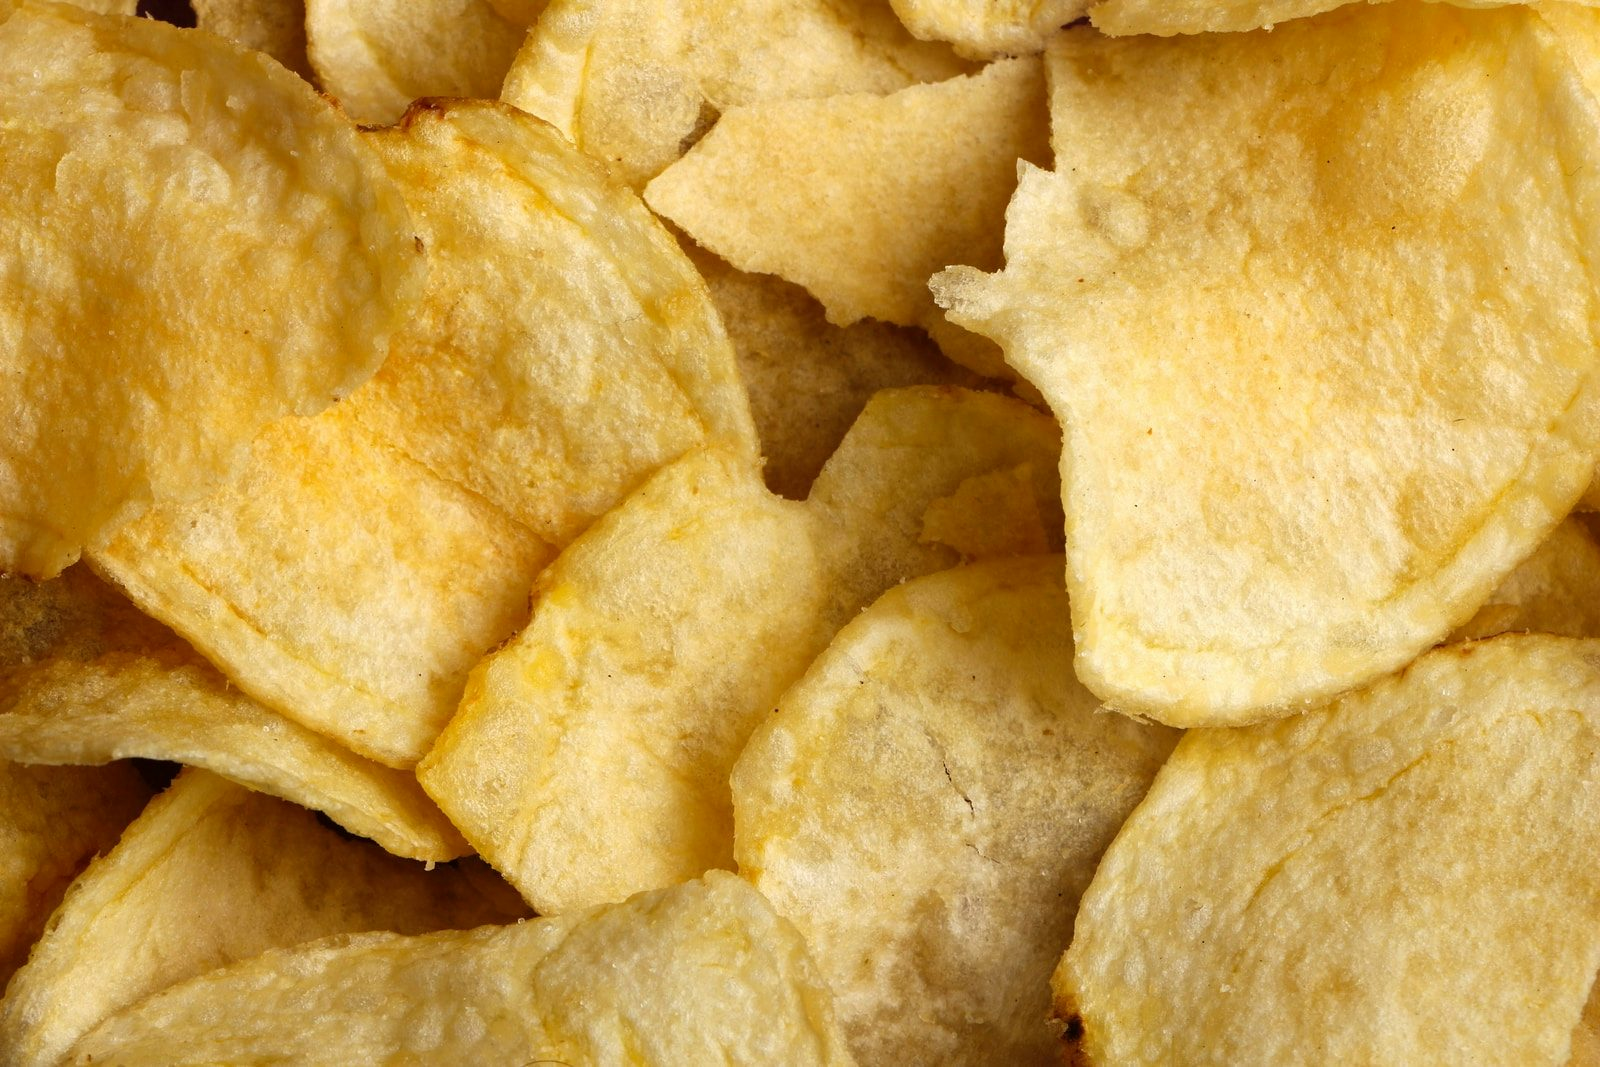 Potato chips bagging